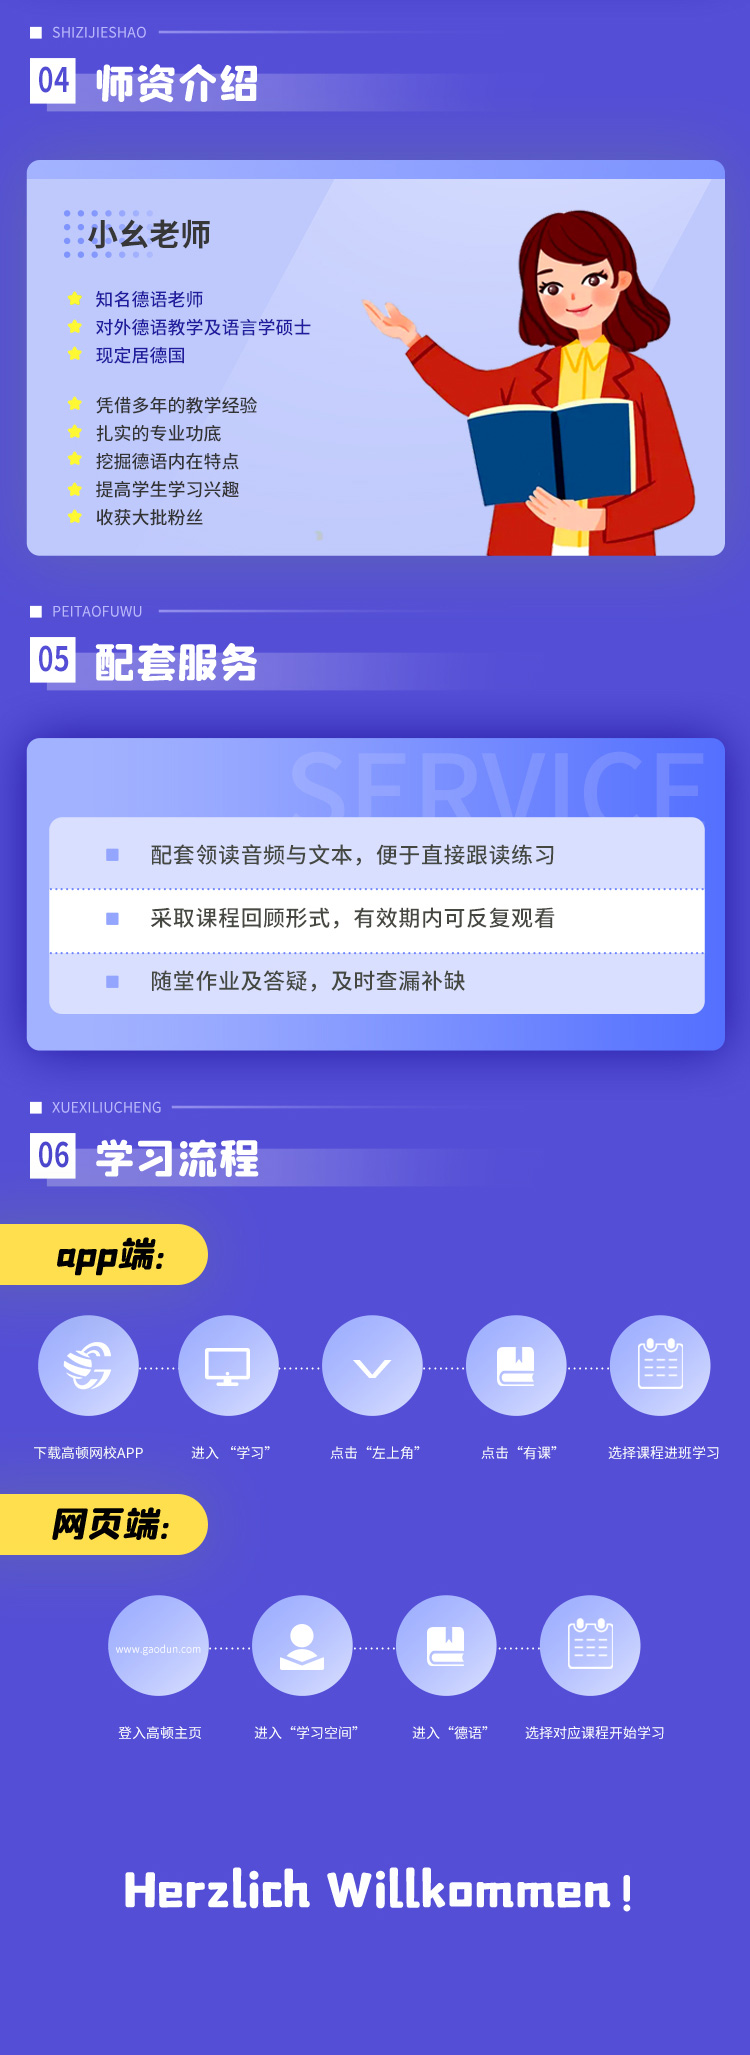 https://simg01.gaodunwangxiao.com/uploadfiles/product-center/202208/29/2968a_20220829094329.jpg